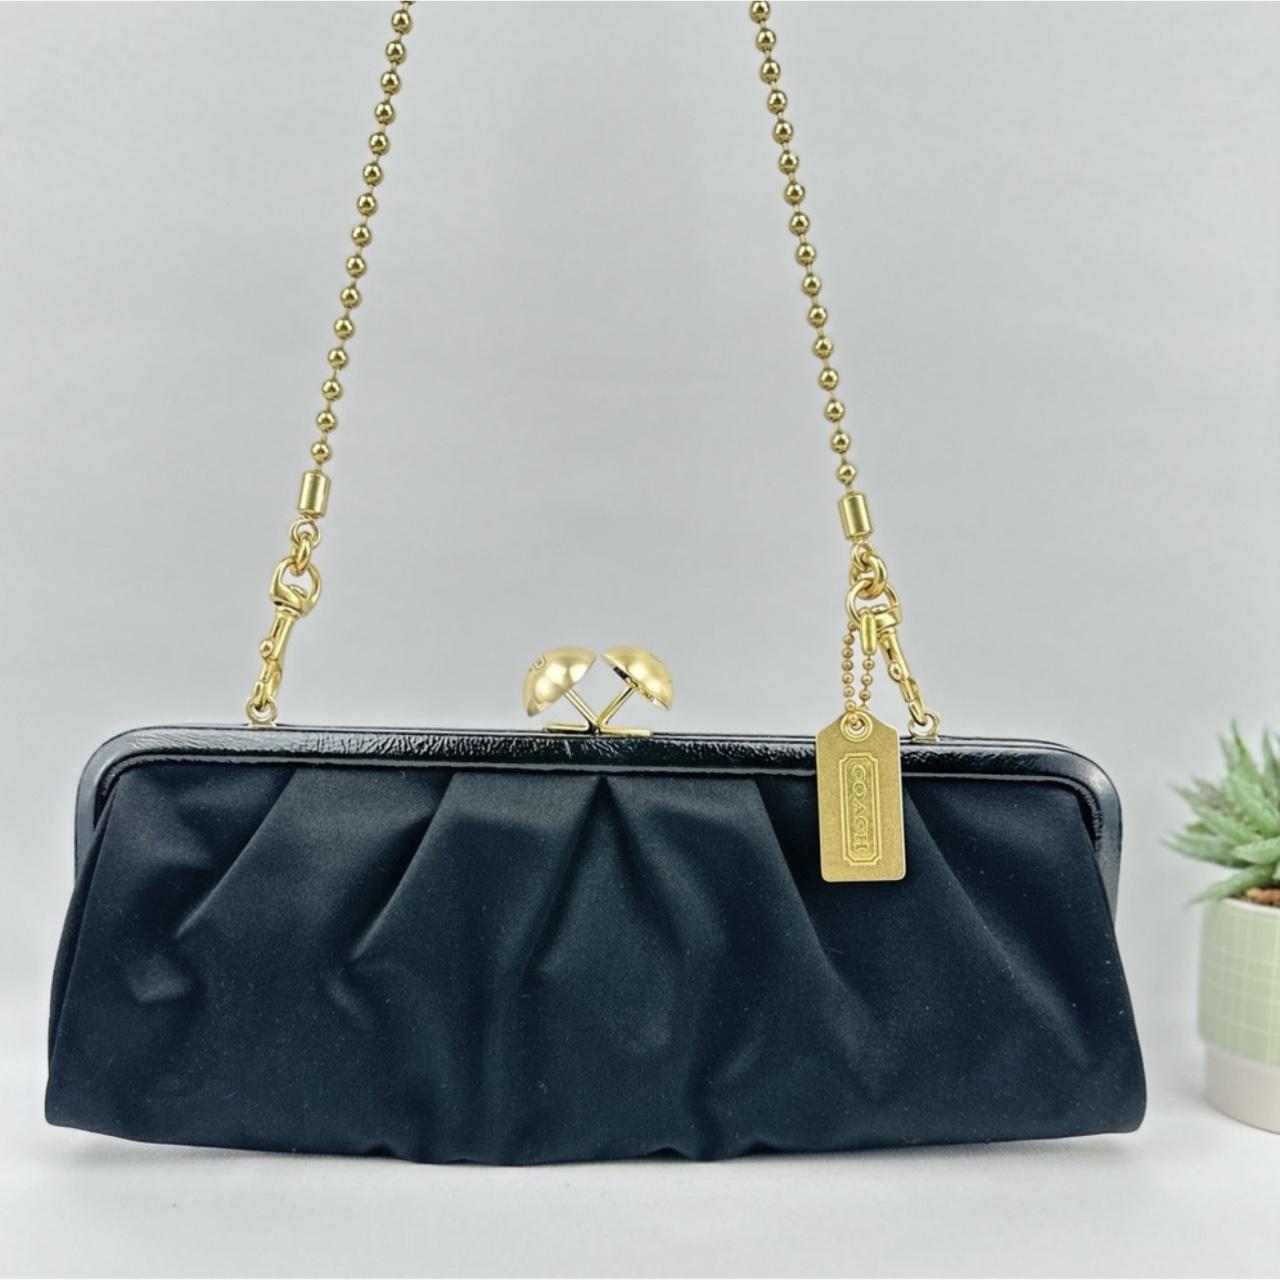 Mavin | COACH Black Patent Leather Shoulder Bag Purse Tote Boho Kiss Lock  H1276 F19215